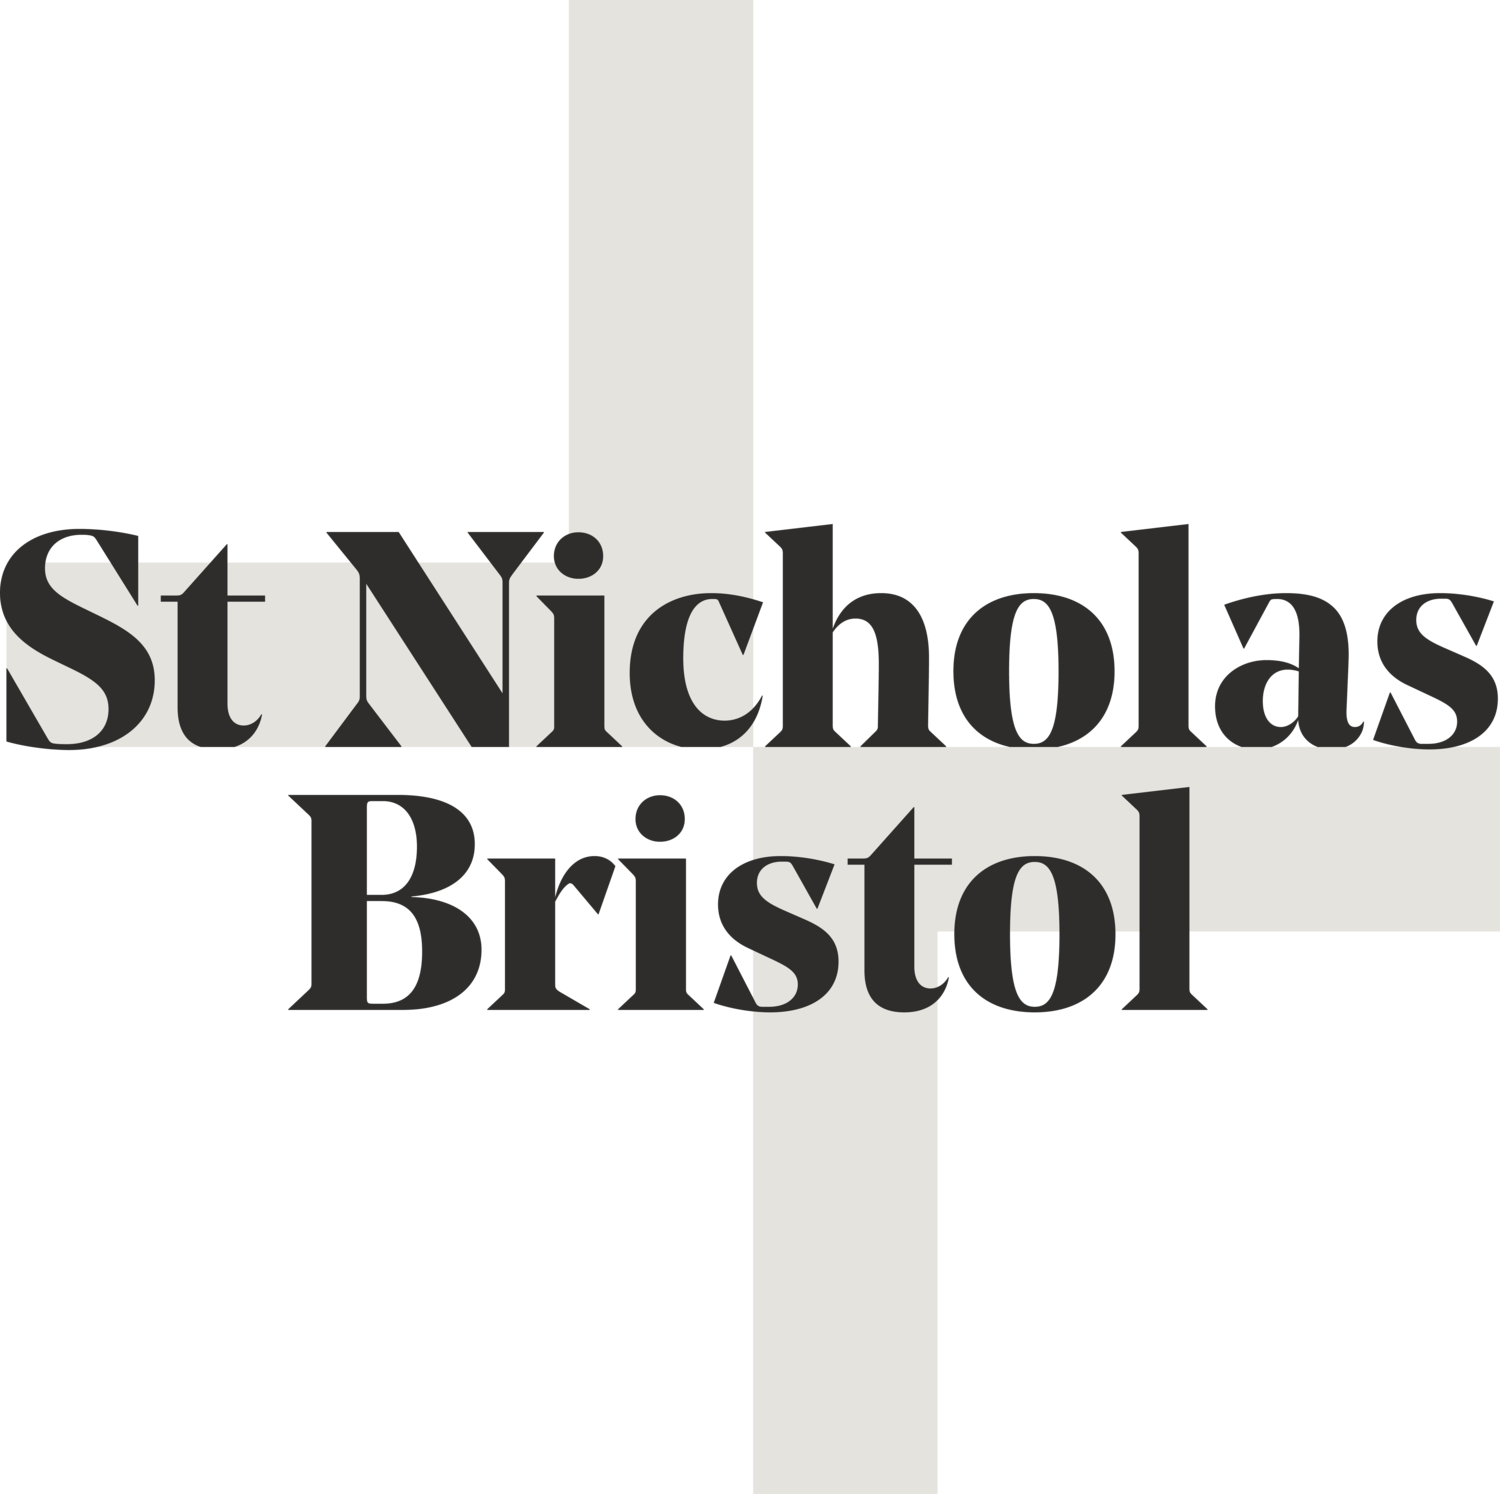 Nicholas Logo - St Nicholas Bristol